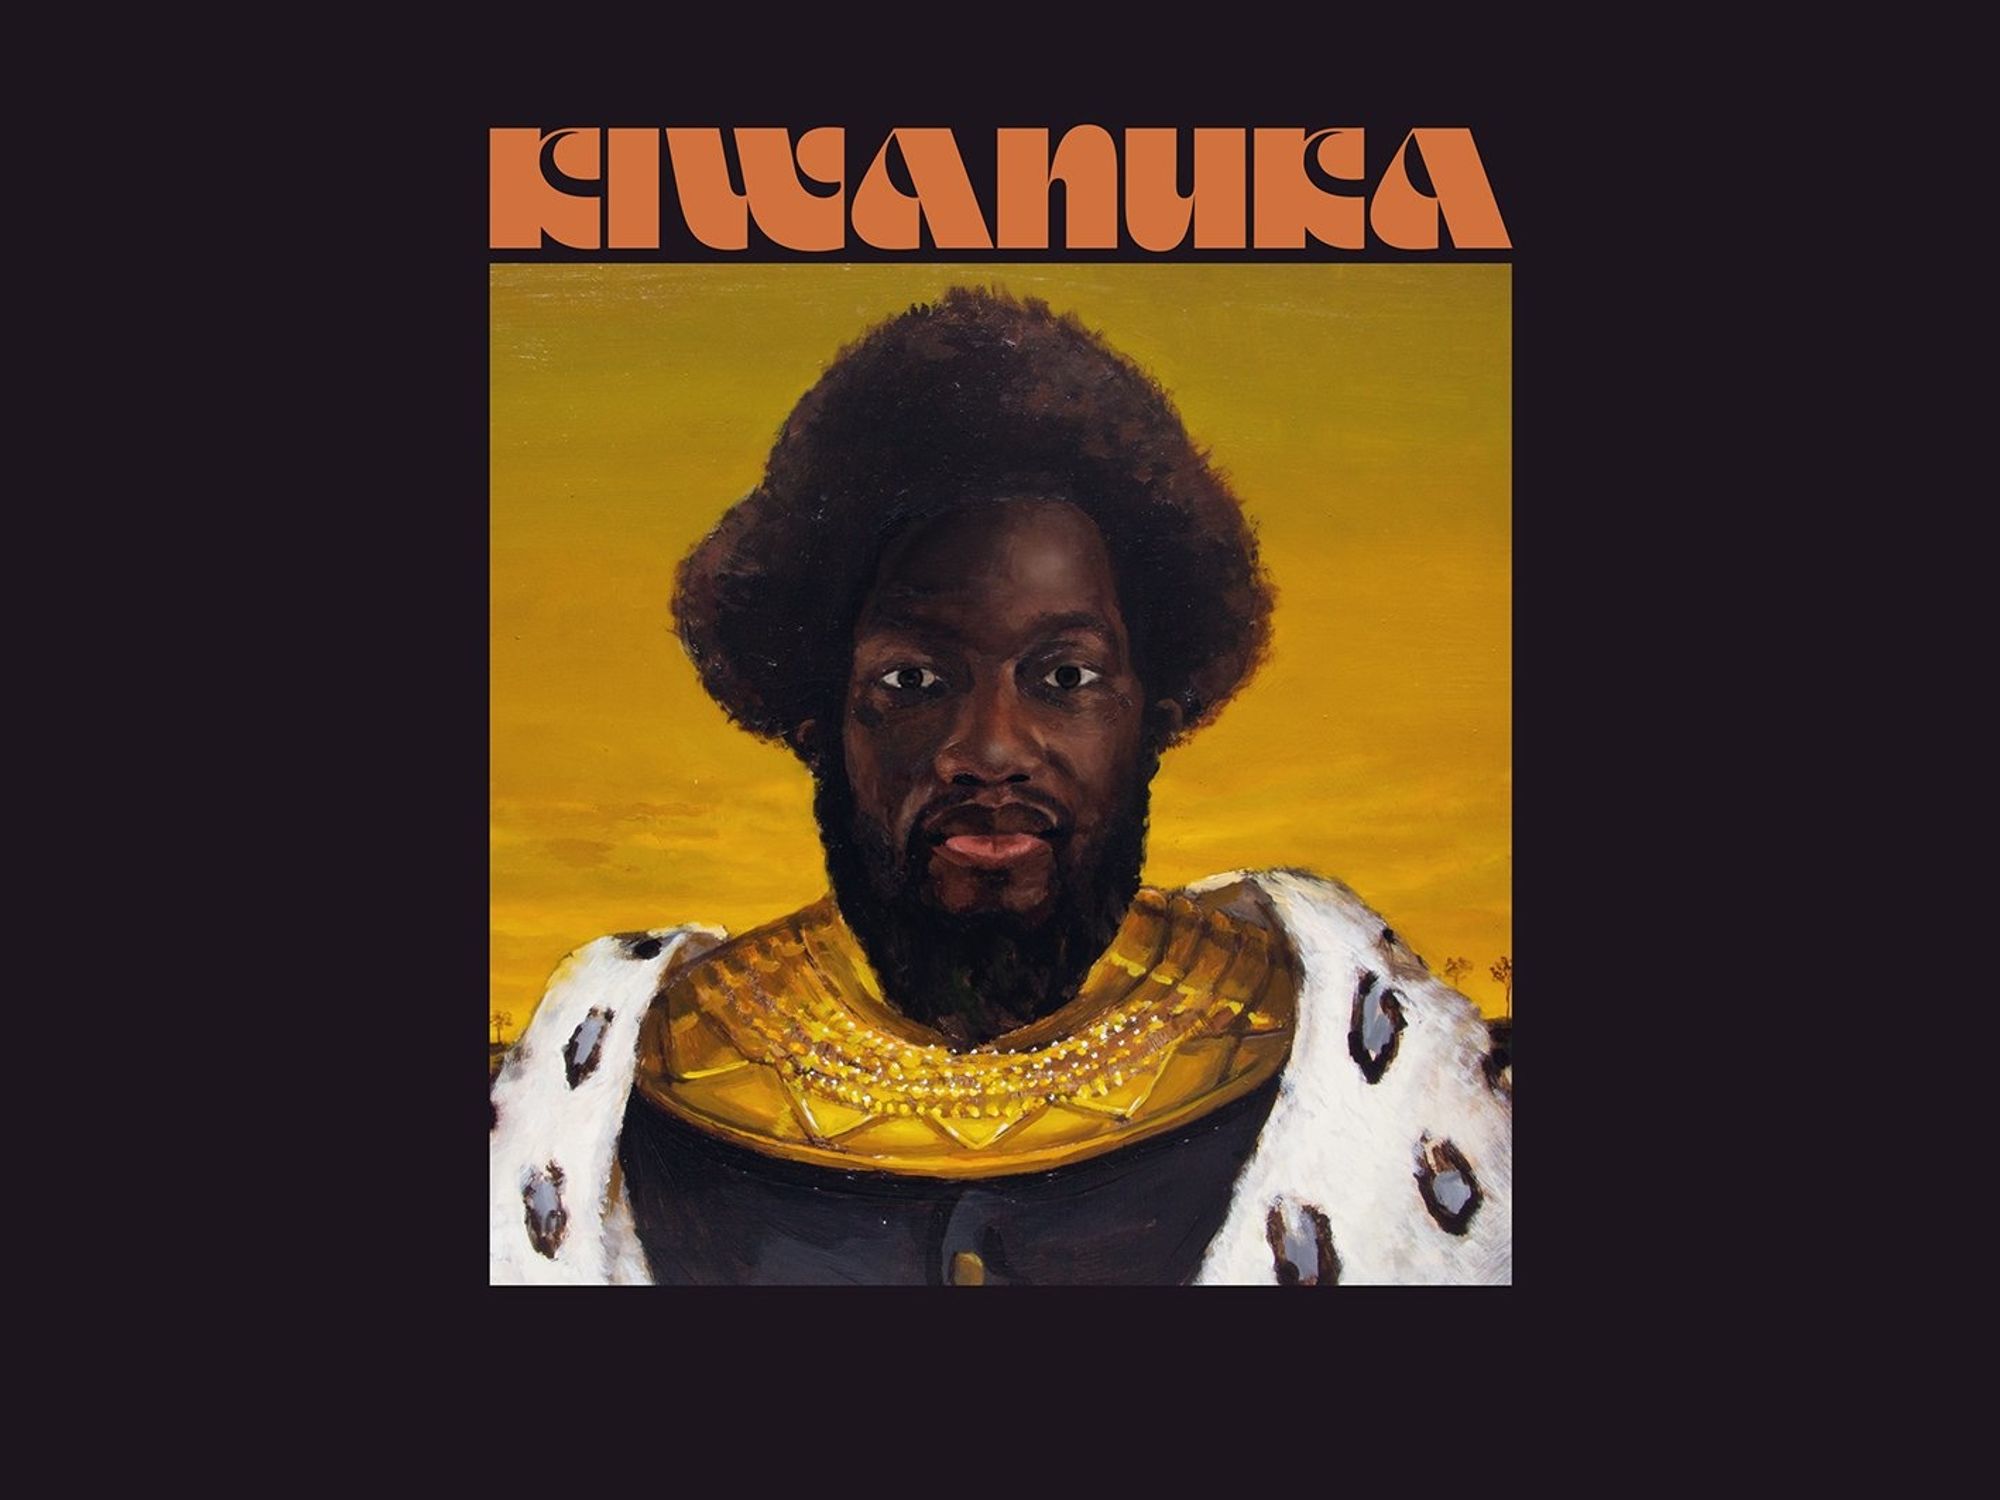 Michael Kiwanuka Drops Highly-Anticipated New Album 'KIWANUKA'